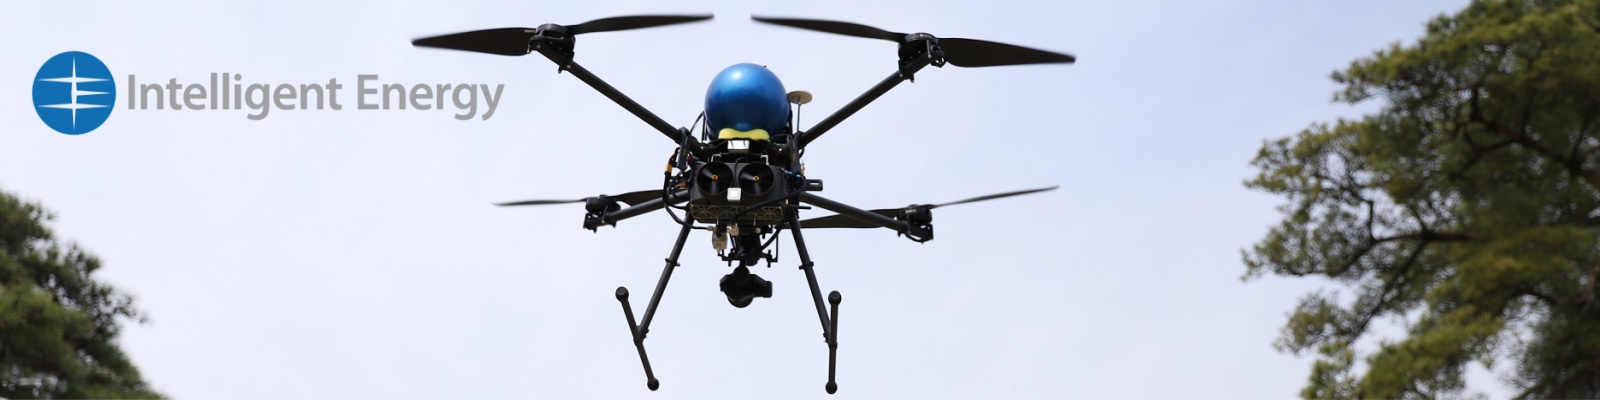 MetaVista breaks Guinness World Record of multi rotor UAV flight time using Intelligent Energy Fuel Cell Power Module